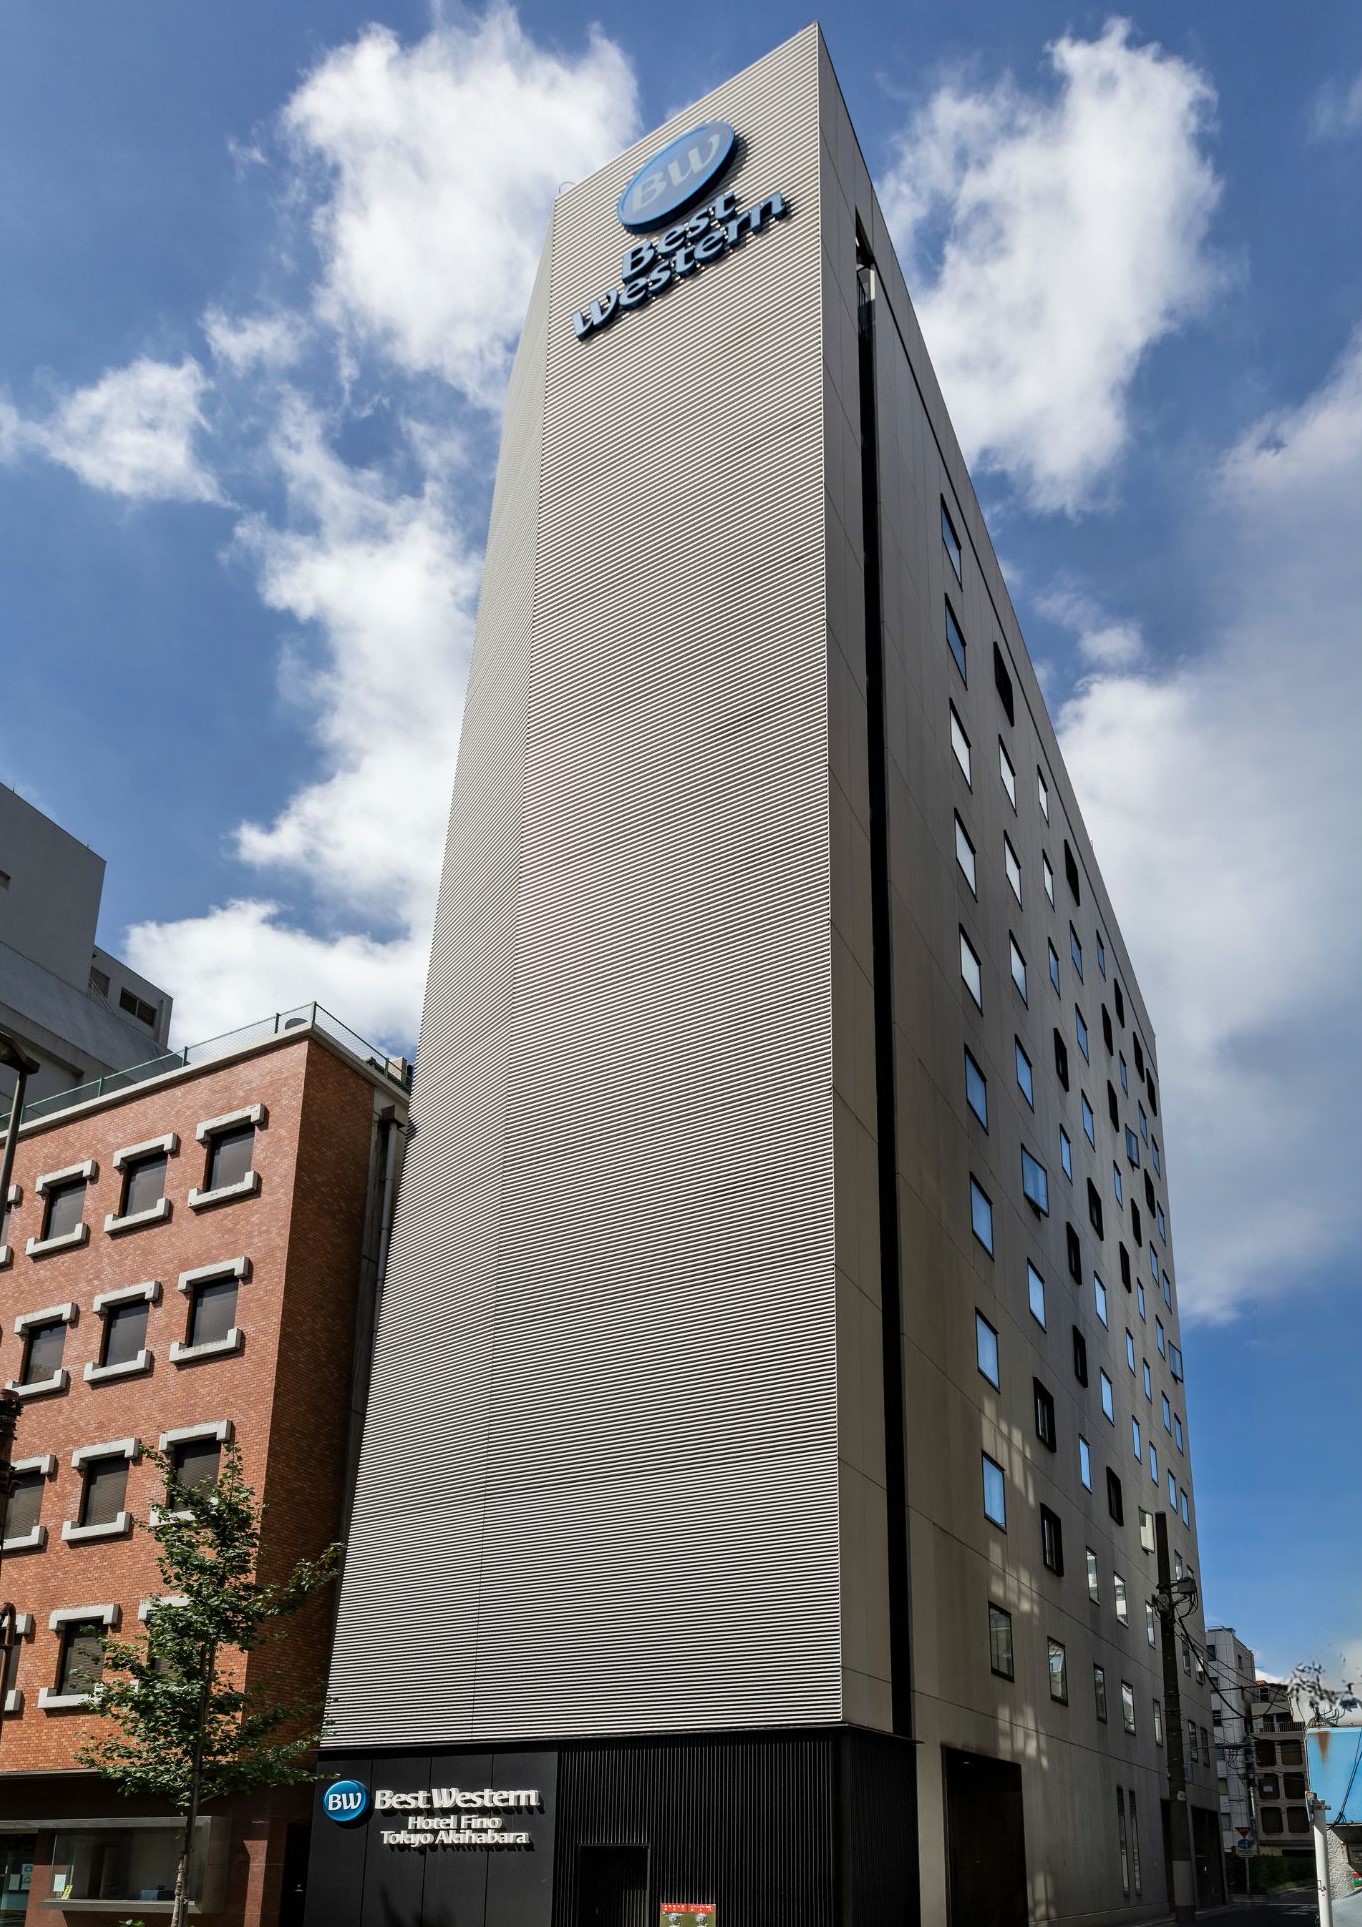 Best Western Hotel Fino Tokyo Akihabara